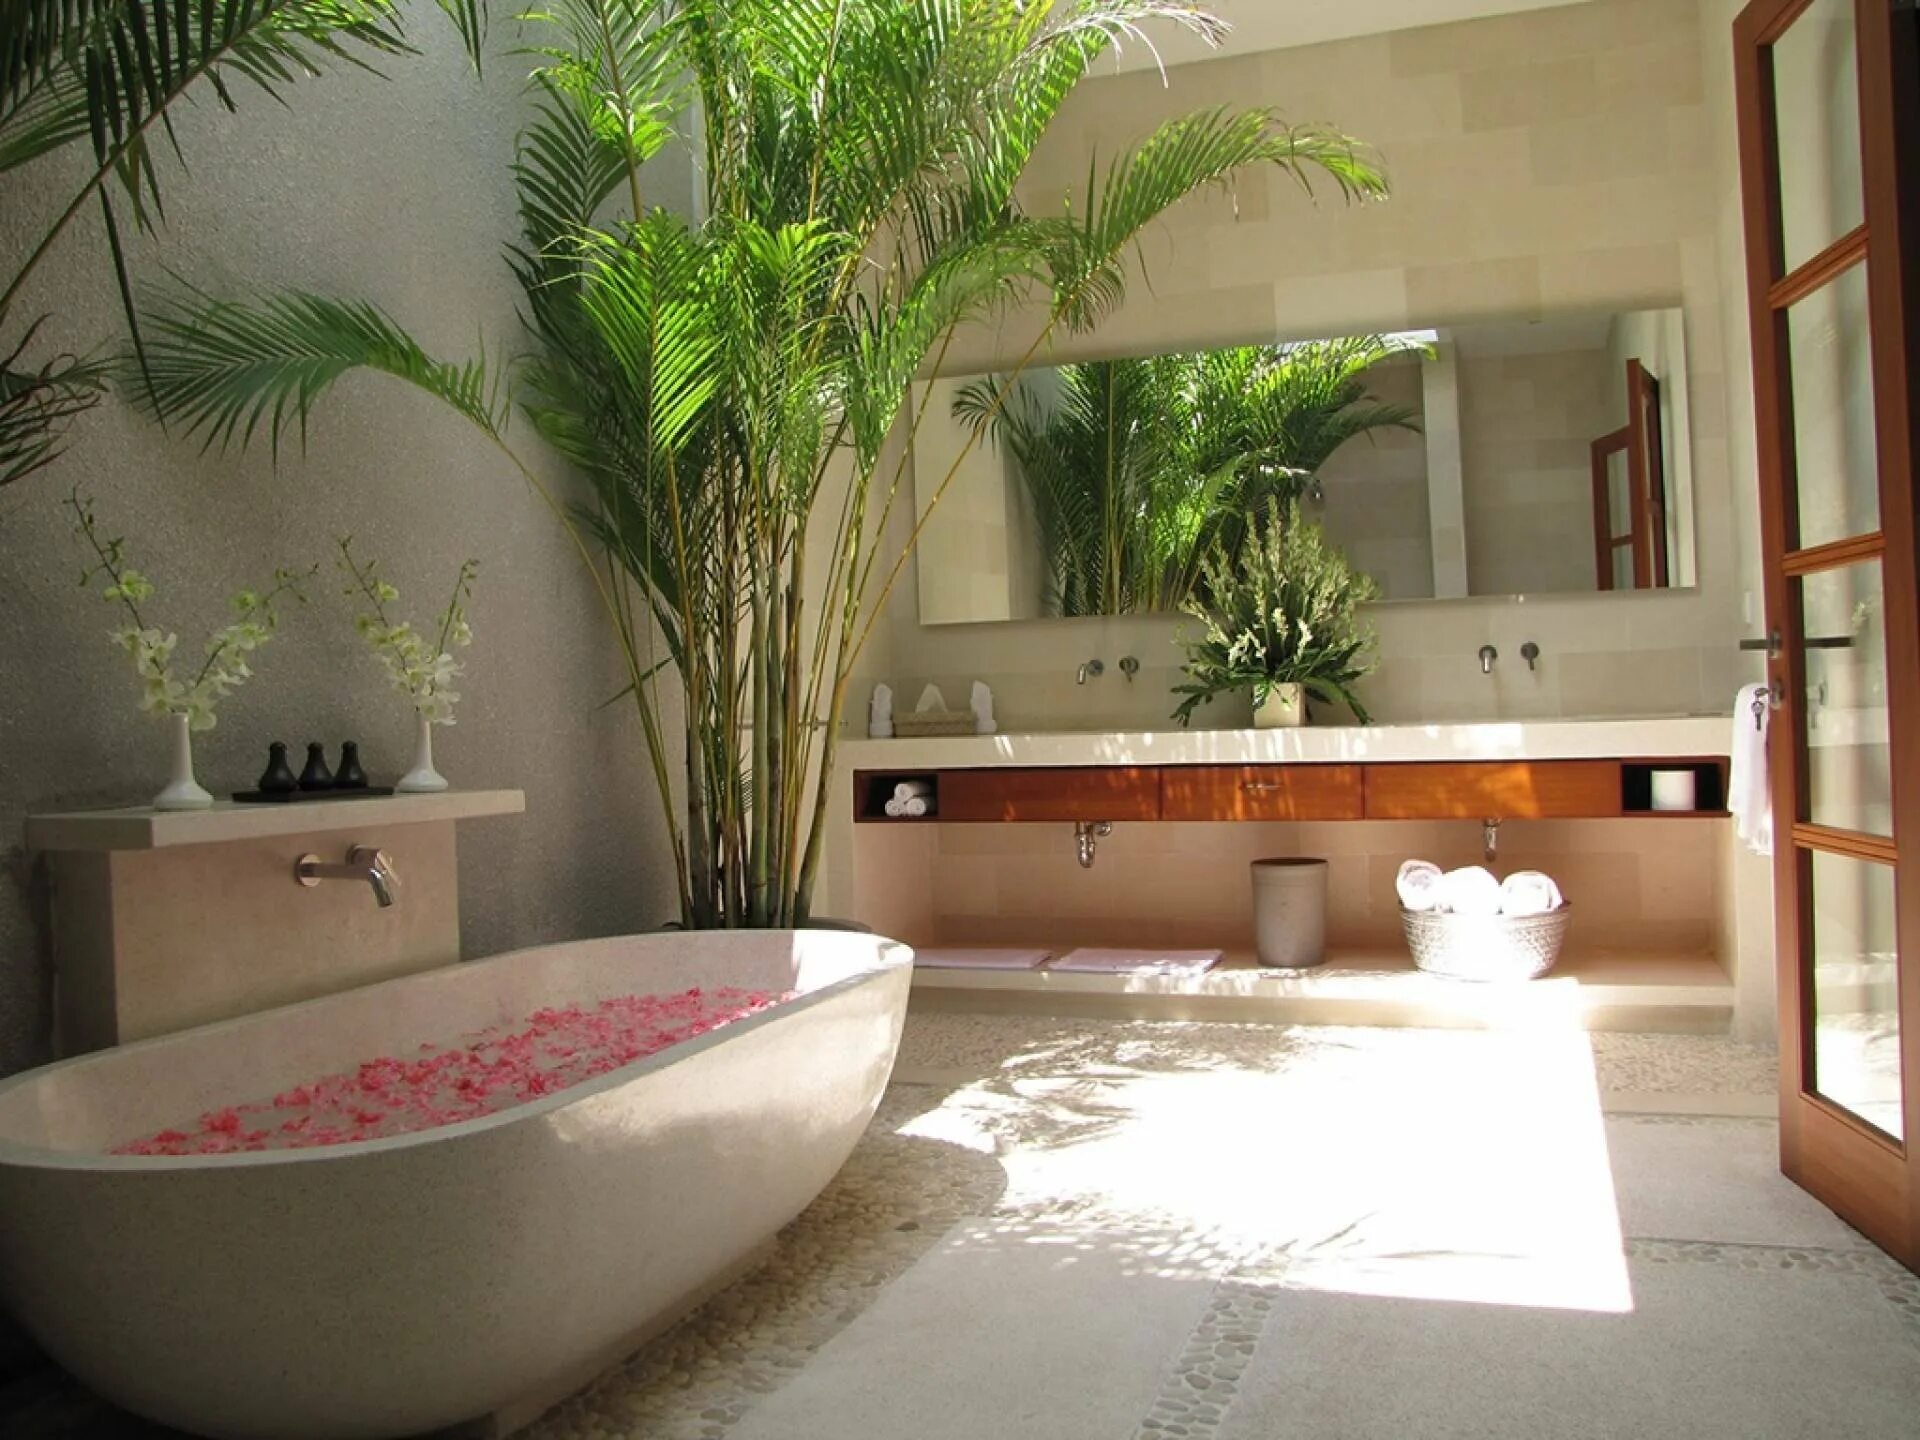 Ванна на вилле. Ванная в балийском стиле. Ванна в стиле Бали. Ванна в тропическом стиле.